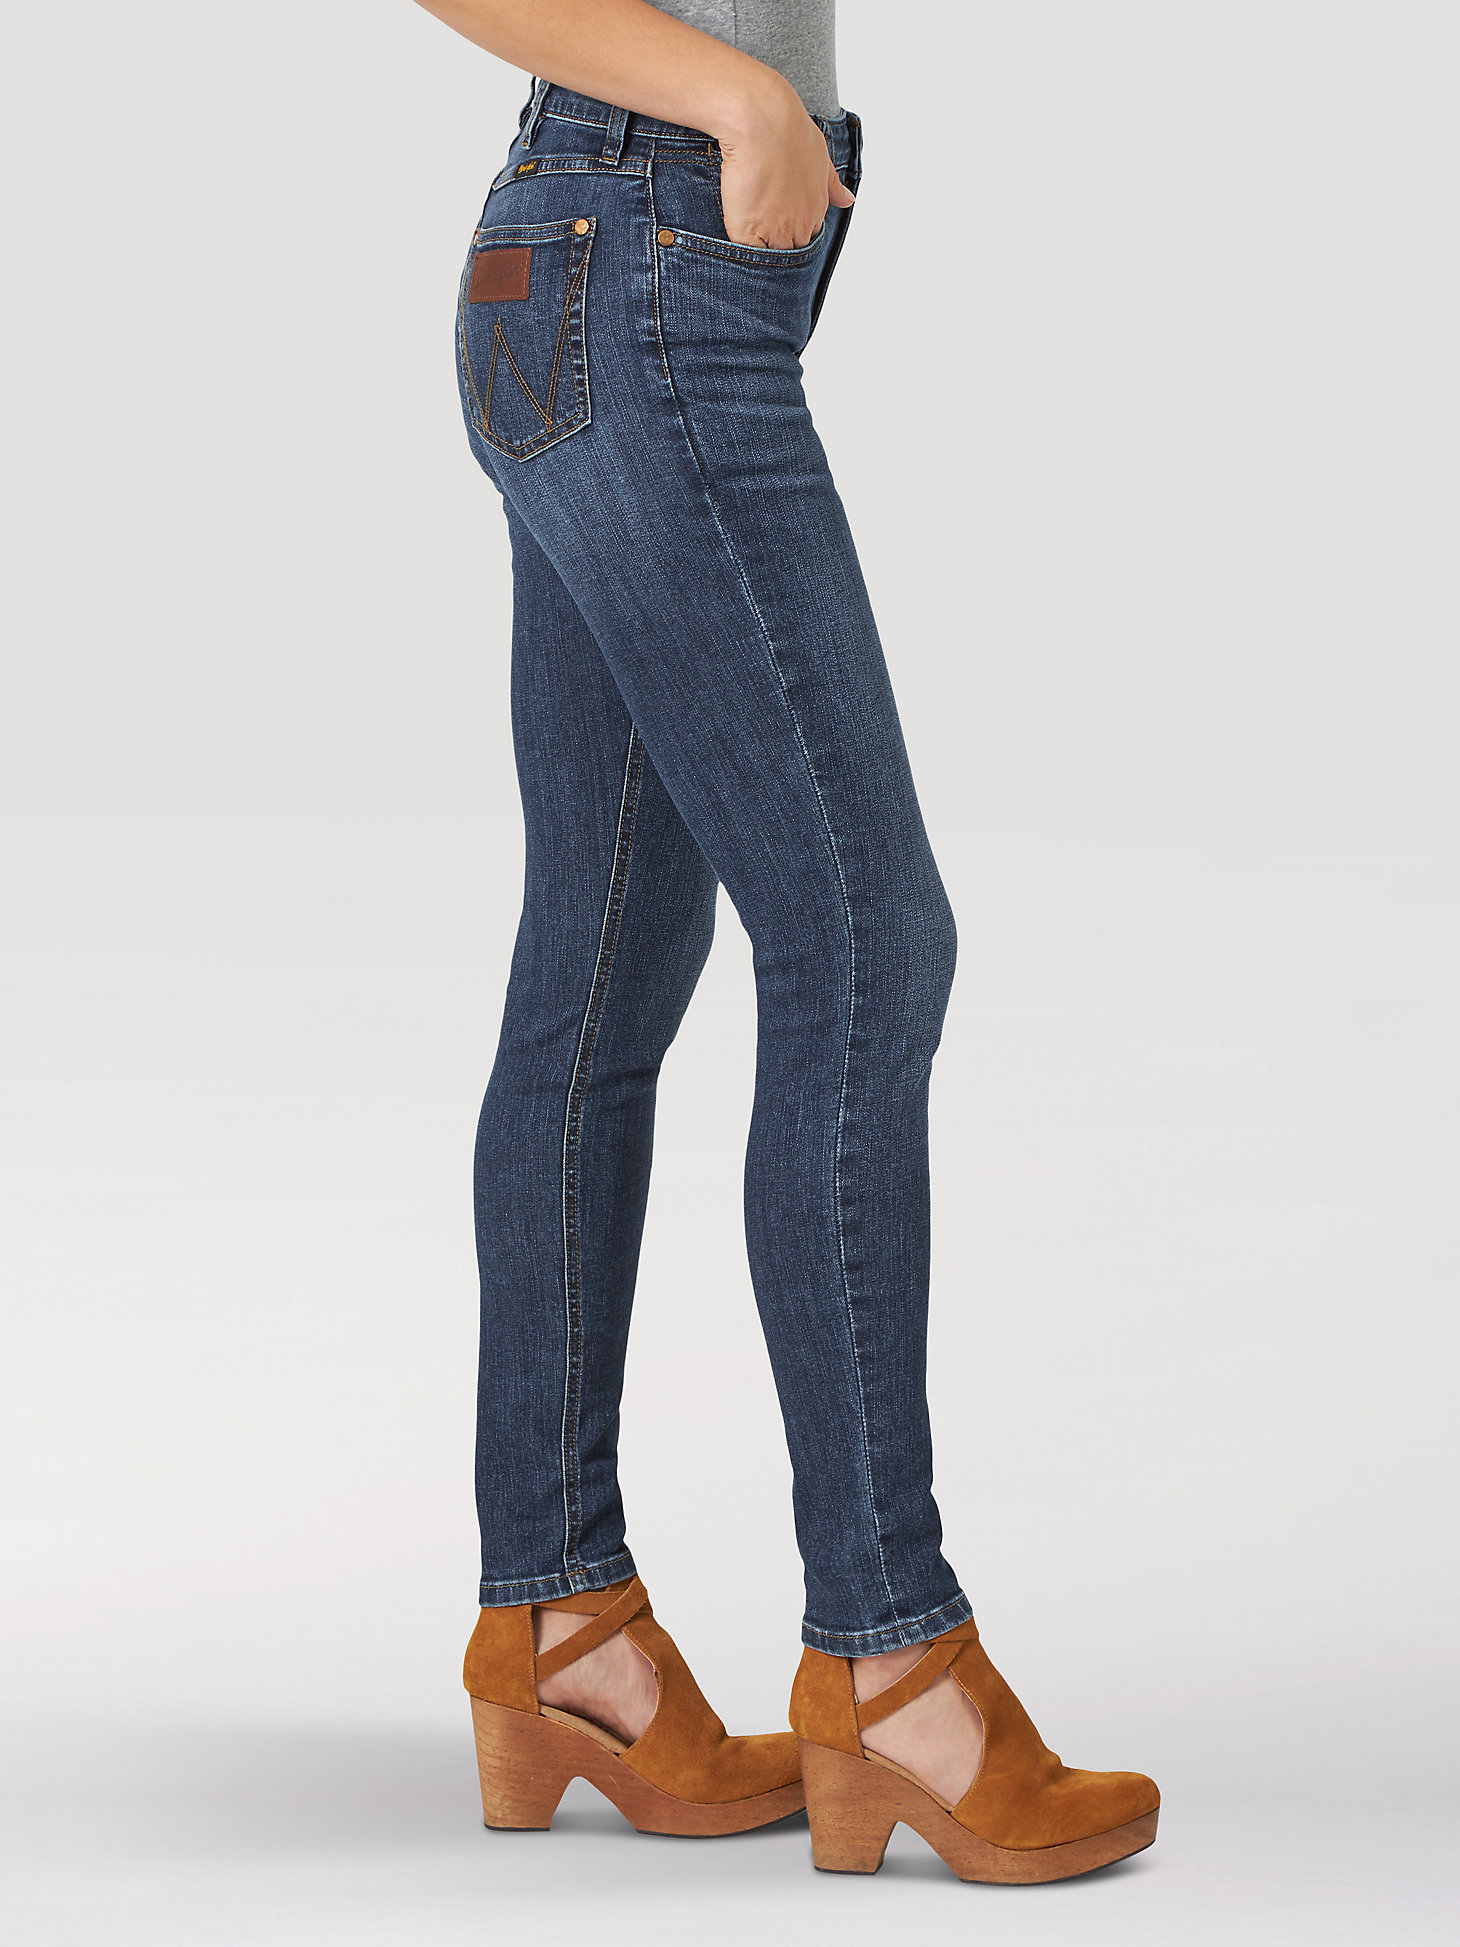 Women's Wrangler Retro® High Rise Skinny Jean in Leah alternative view 1